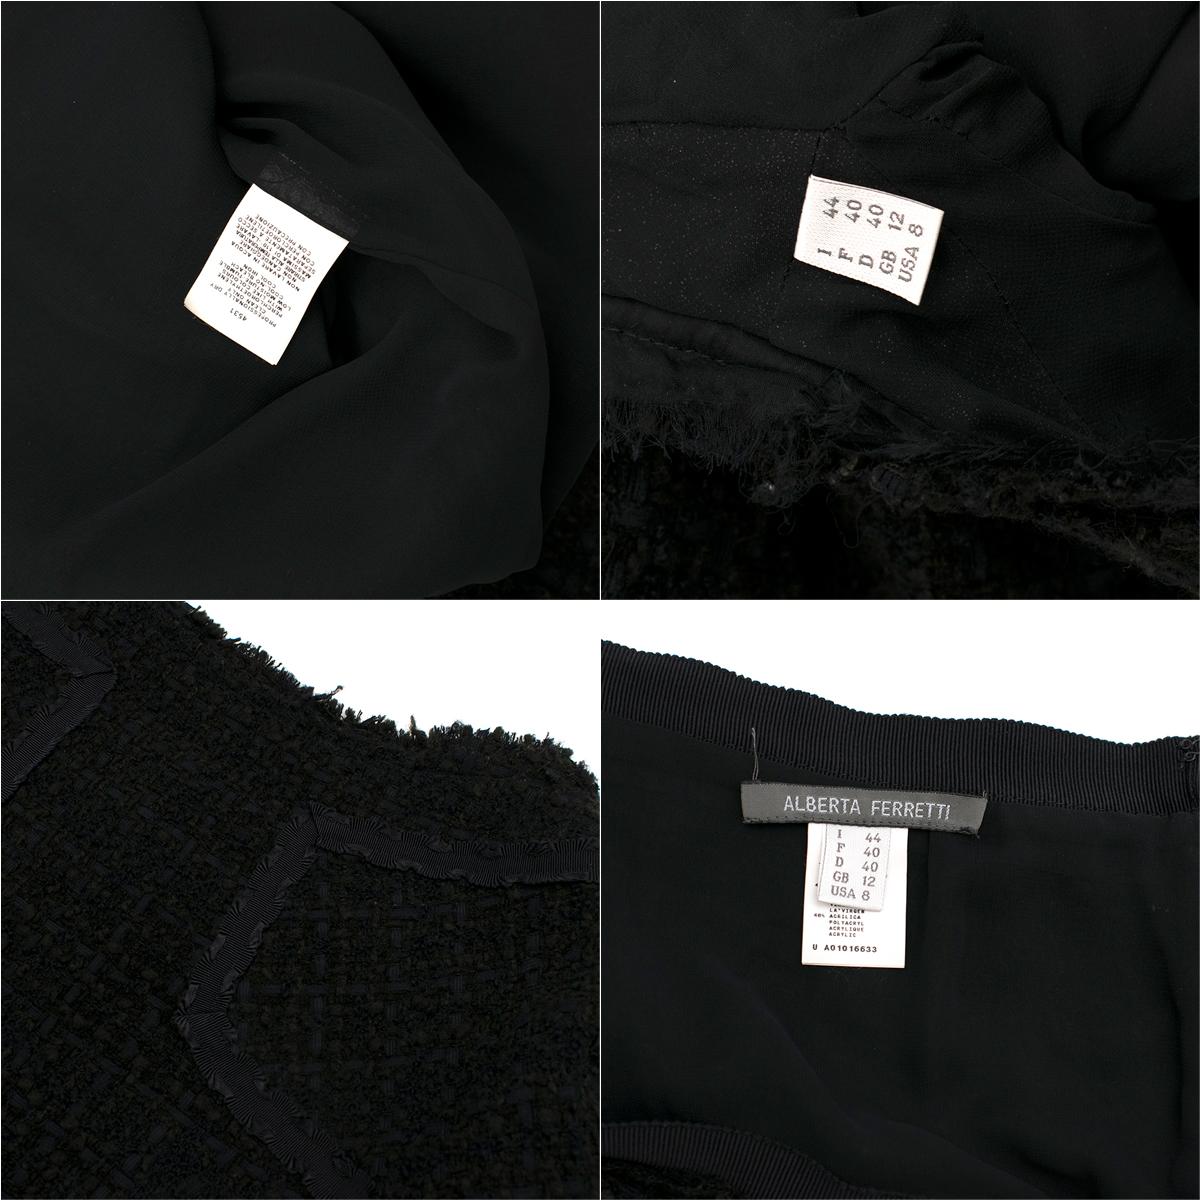 Alberta Ferretti Black Tweed Jacket & Skirt	- Size US 8 5